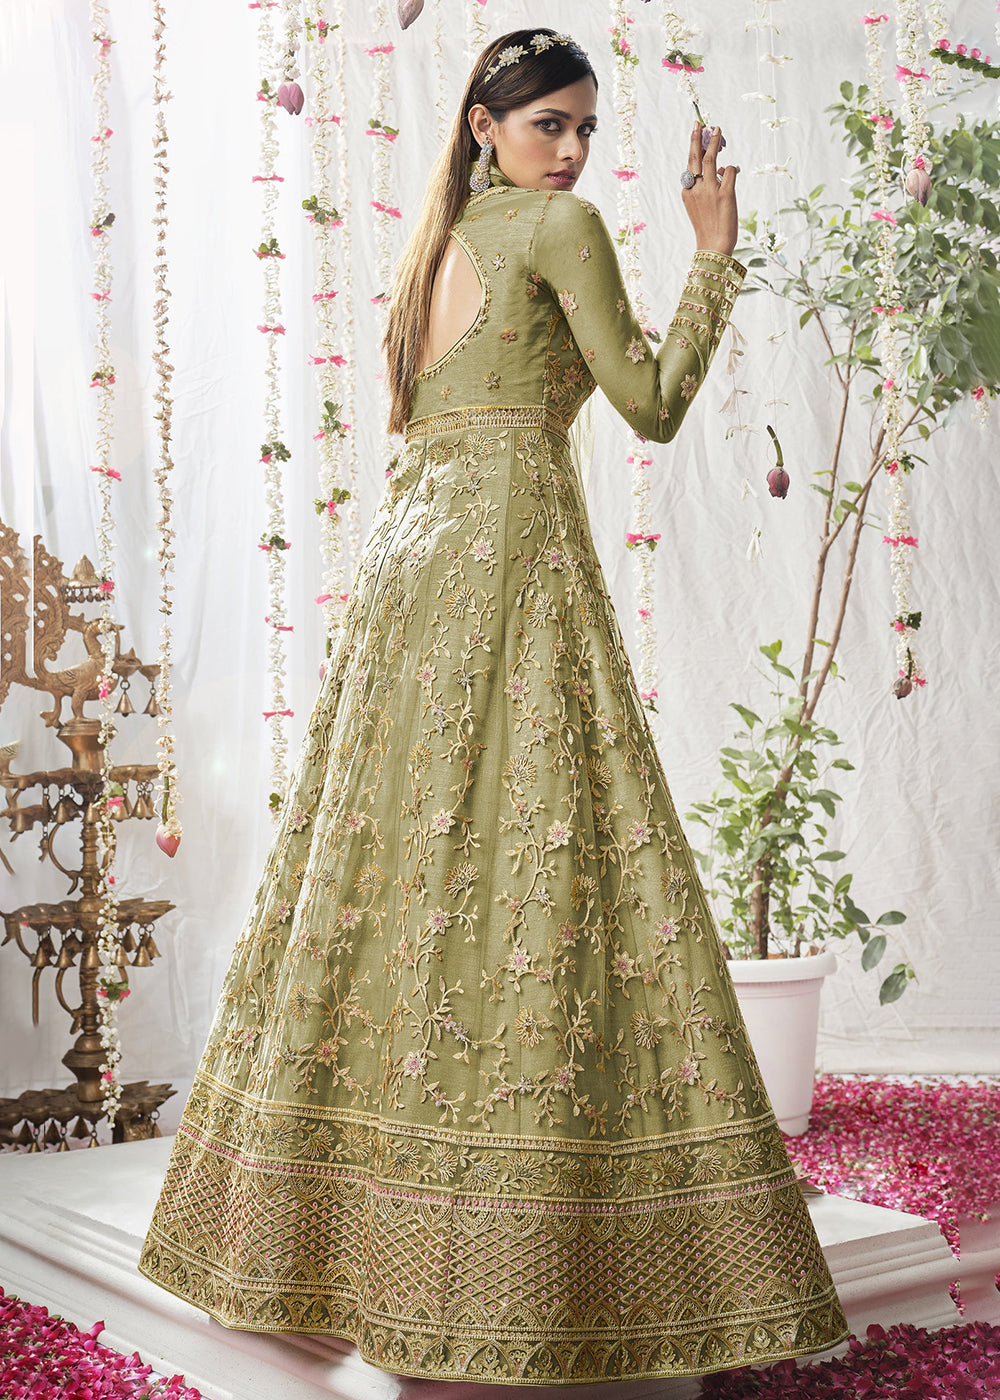 Buy Now Fantastic Sea Green Wedding Festive Floor Length Anarkali Suit Online in USA, UK, Australia, New Zealand, Canada & Worldwide at Empress Clothing.